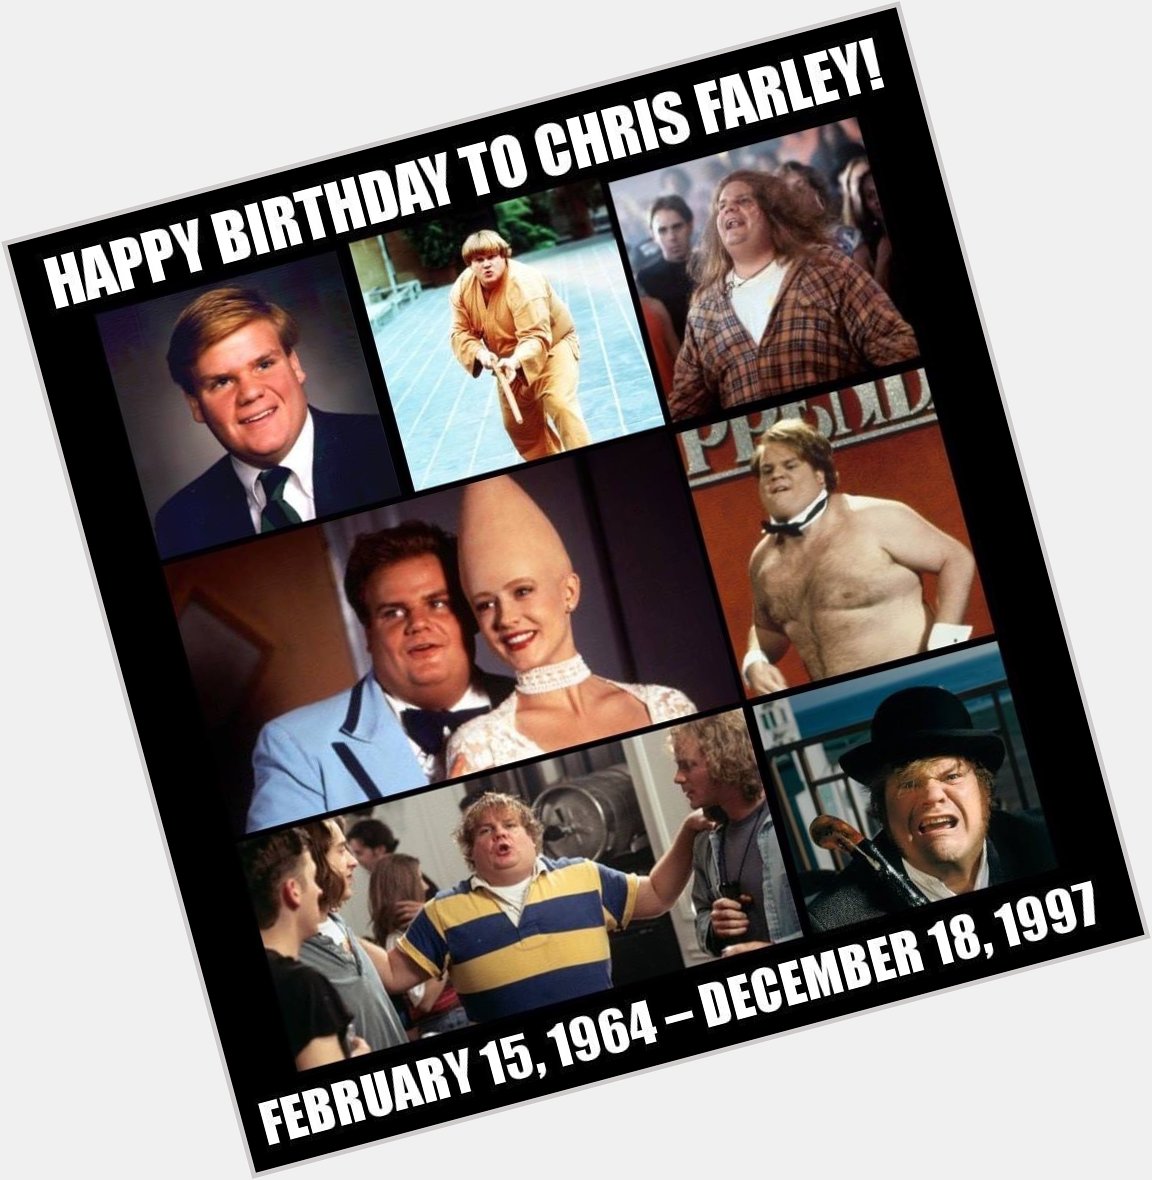       Happy Birthday Chris Farley 